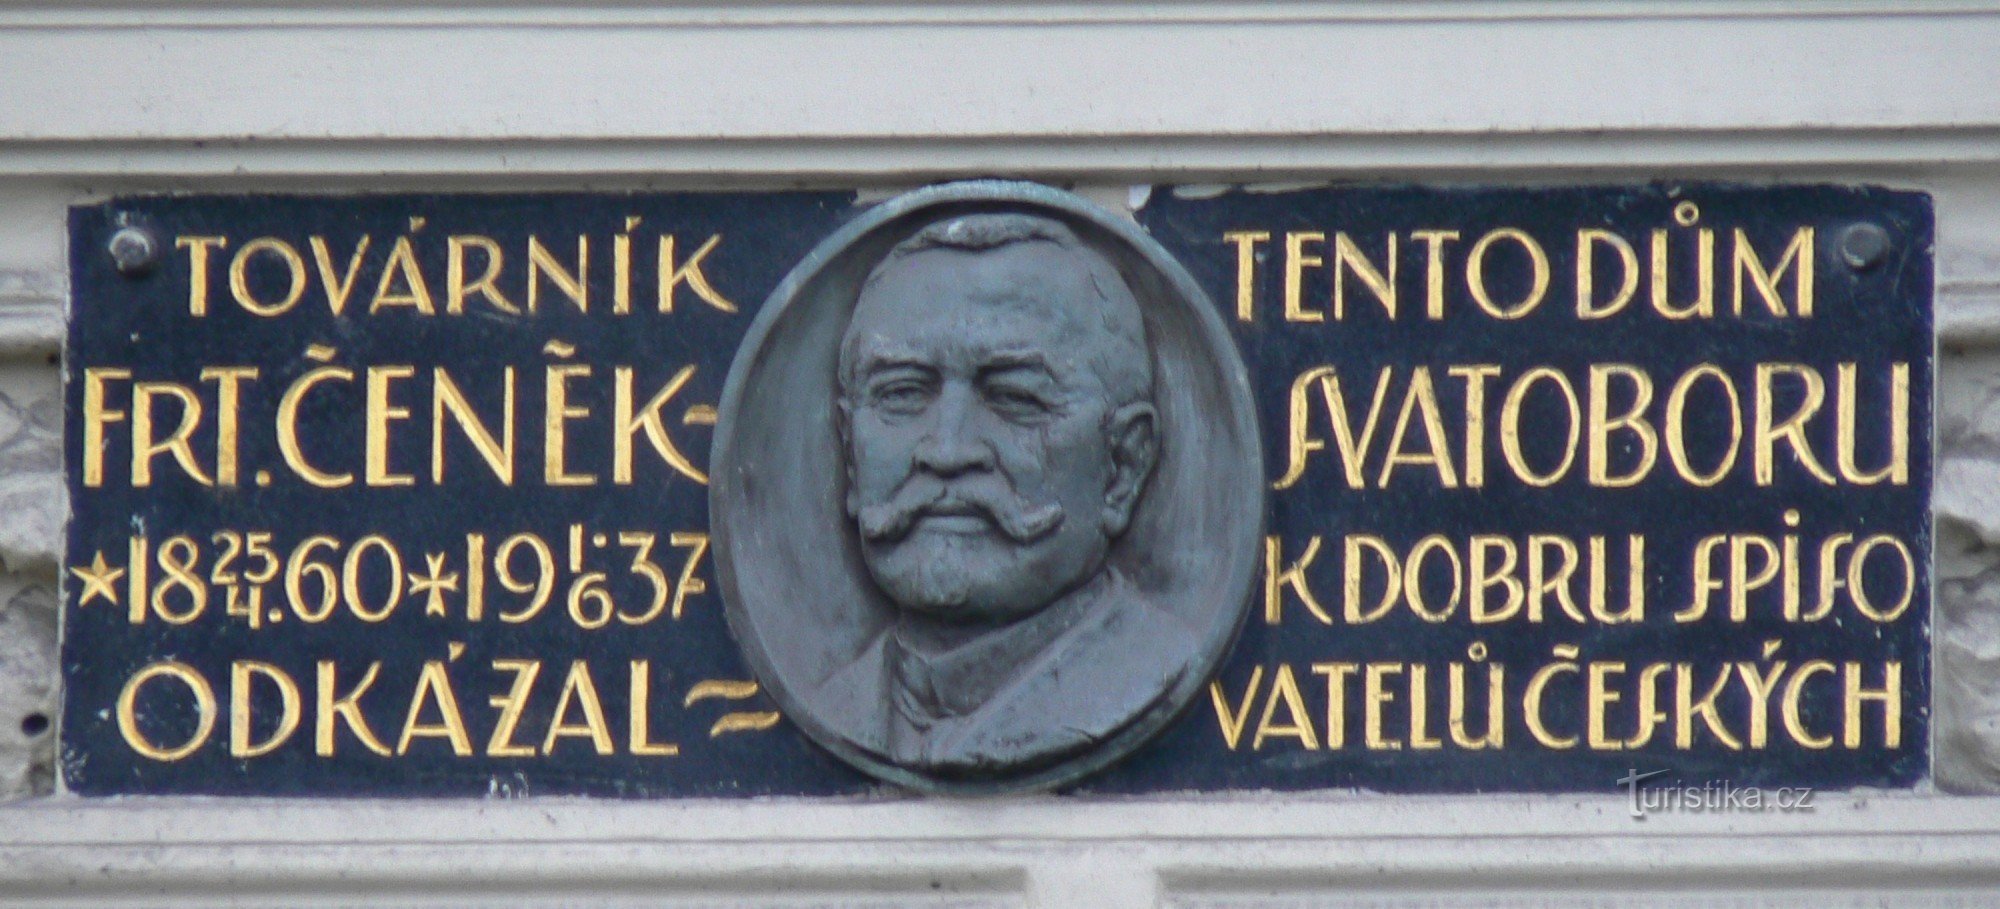 placa memorial František Čeněk